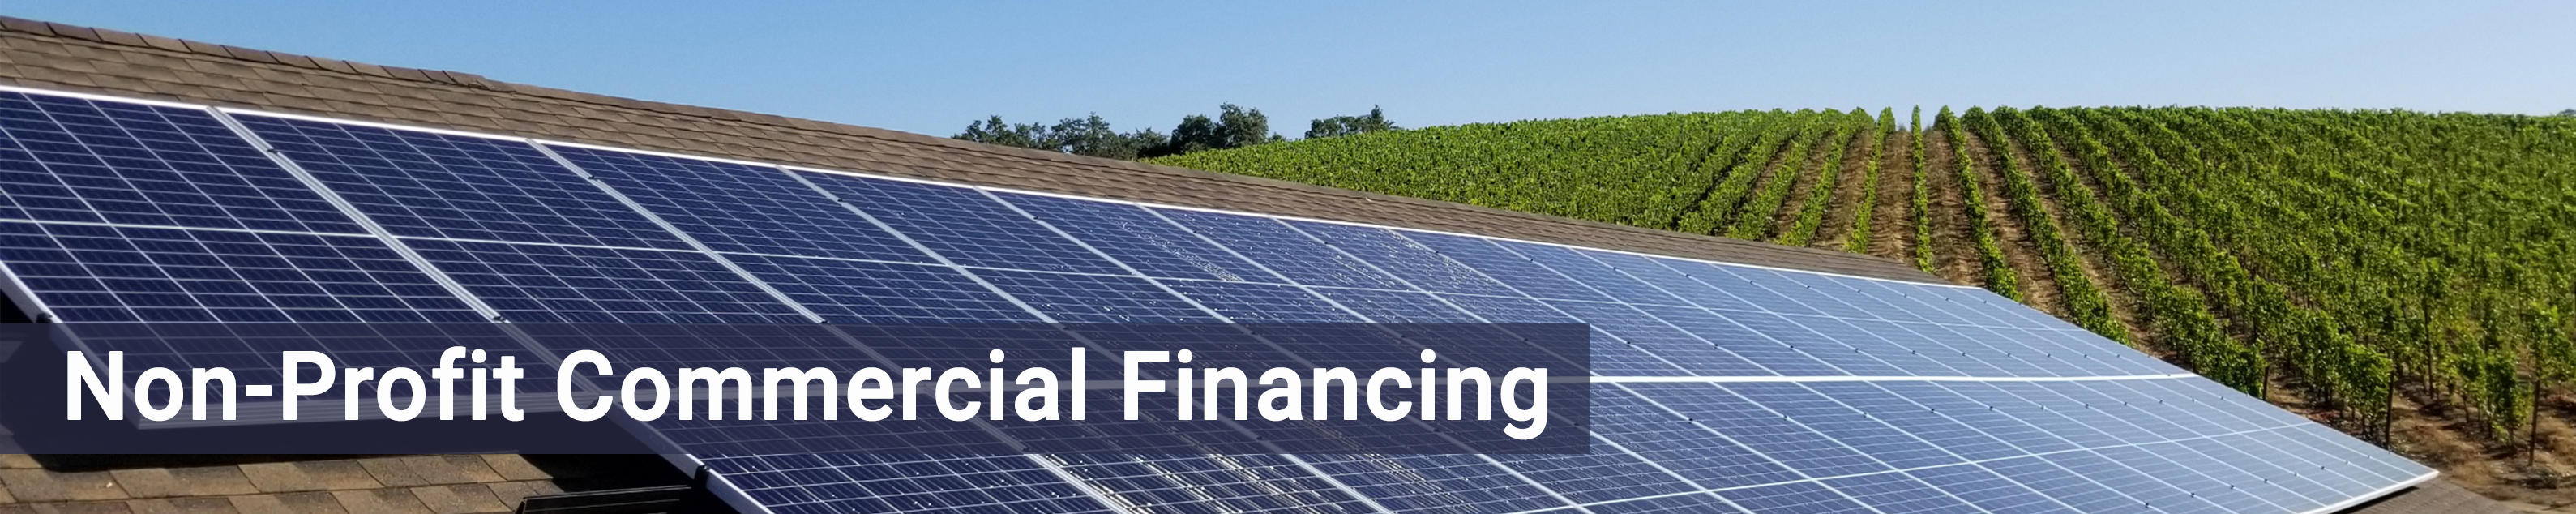 Cornerstone's Commercial Solar Financing For Non-Profits